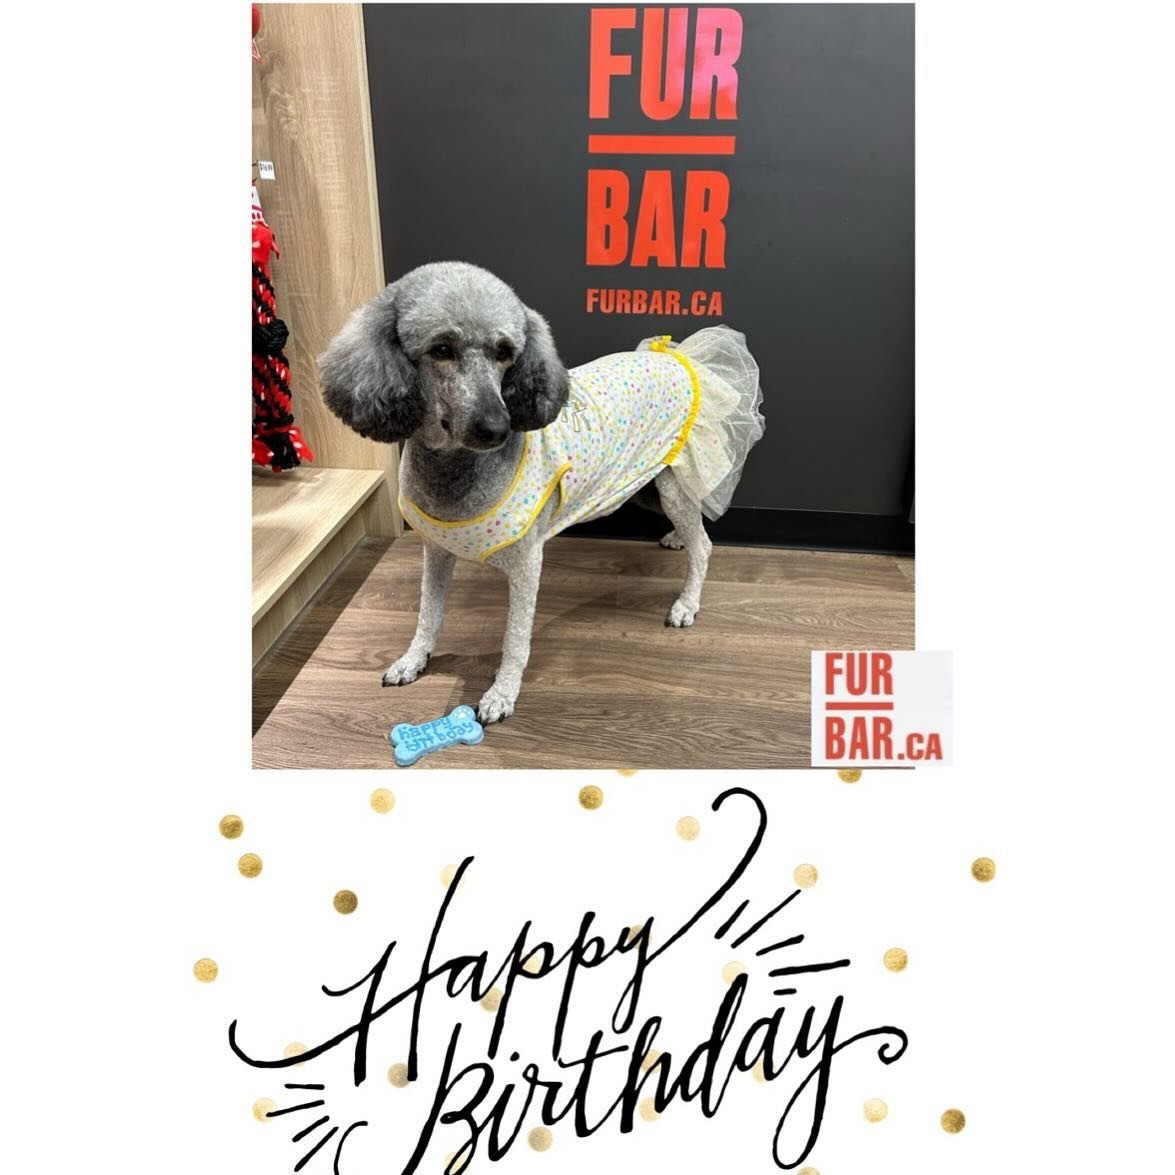 Beatrice &hearts;️⭐️
Happy Birthday to you !! 
#furbar #furbarpetgrooming #happybirthday #happydog #summercut #northyork #toronto #grooming #birthdaygirl 
Groomed by 𝗠𝗲𝗹𝗶𝘀𝘀𝗮